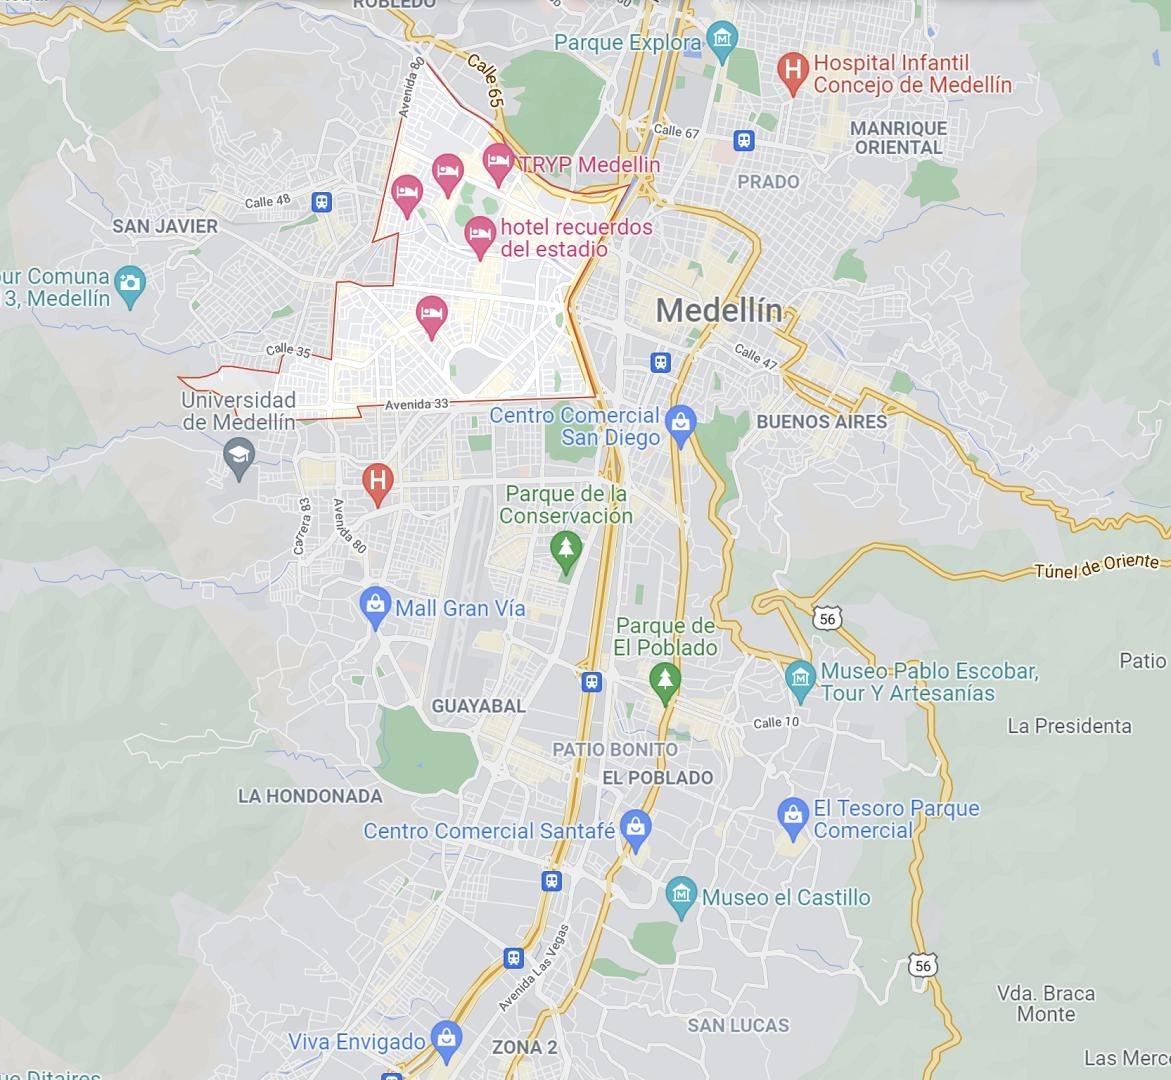 2021-10-12 05_12_52-Laureles - Estadio, Medellin - Google Maps - Opera.jpg